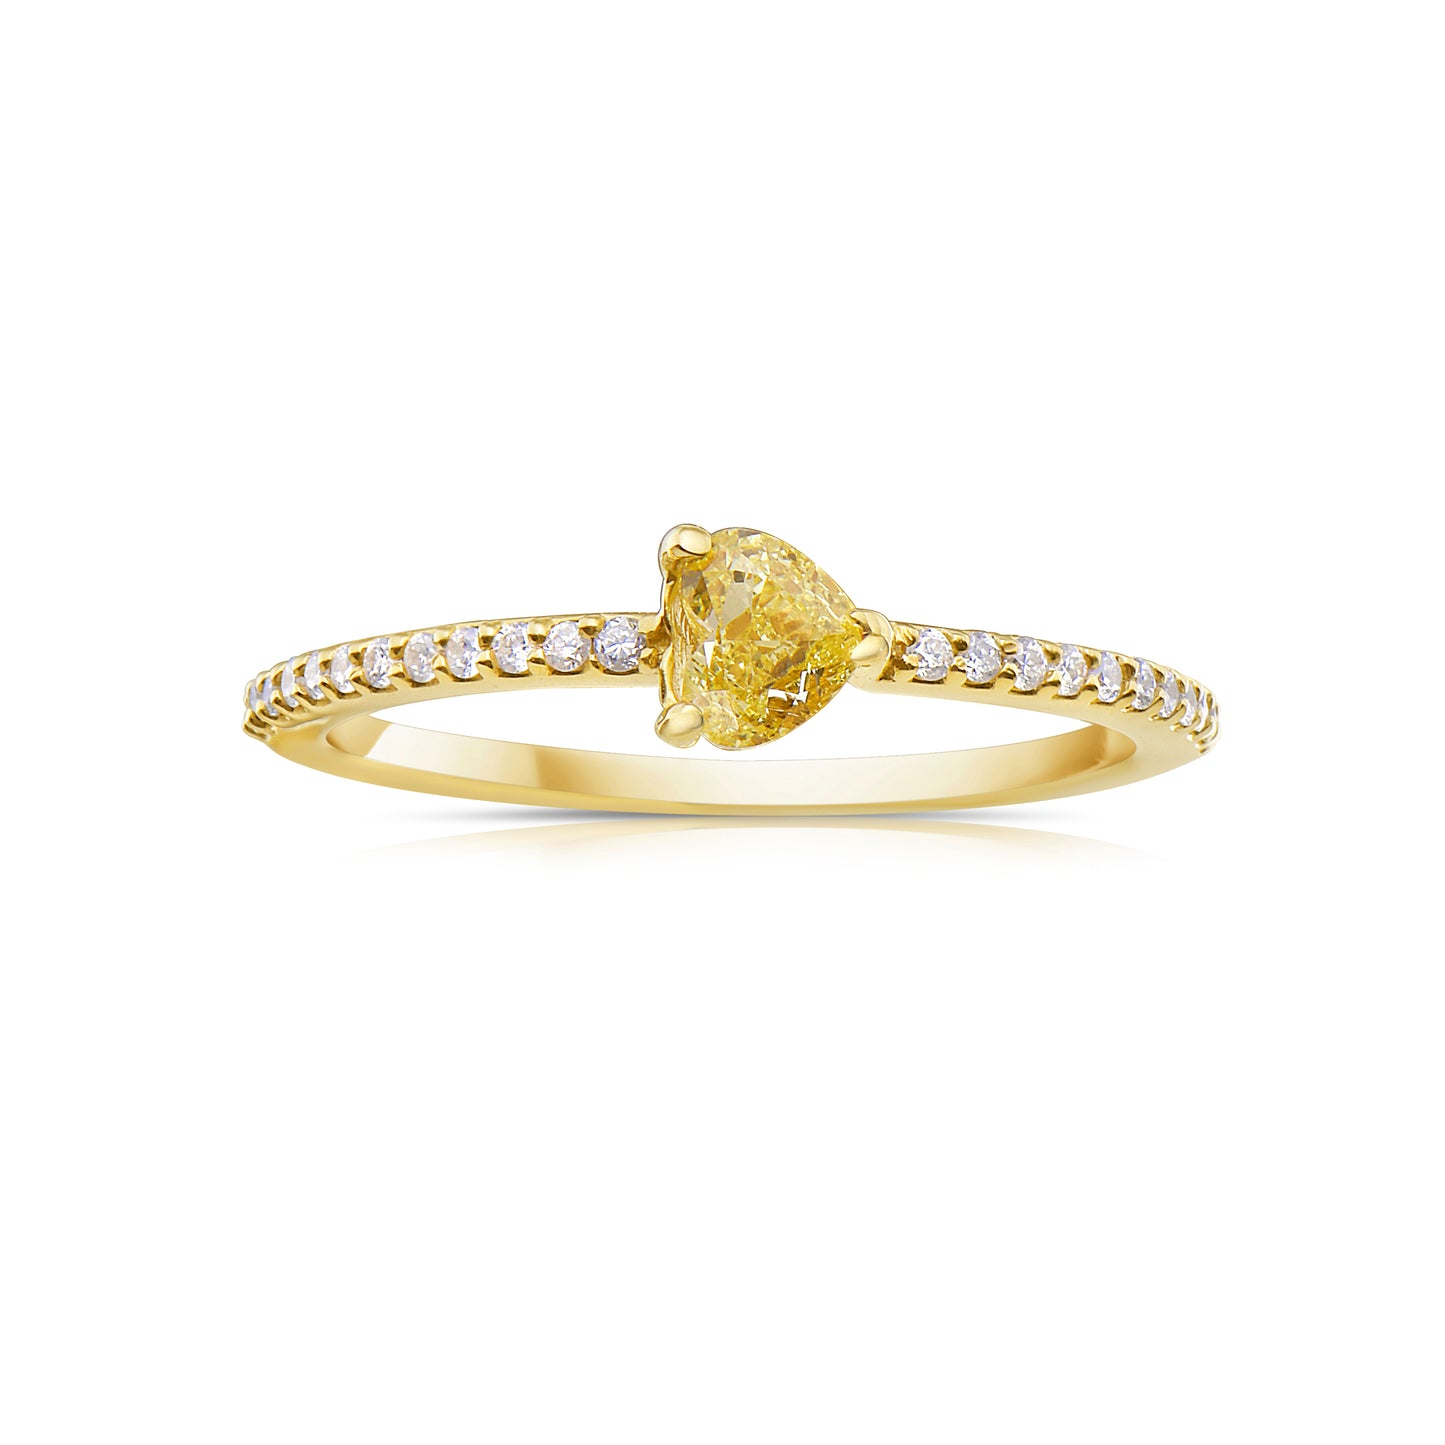  Yellow diamond hearts. Yellow diamond studs. Yellow diamond earrings. Heart diamond earrings. Affordable yellow diamonds.